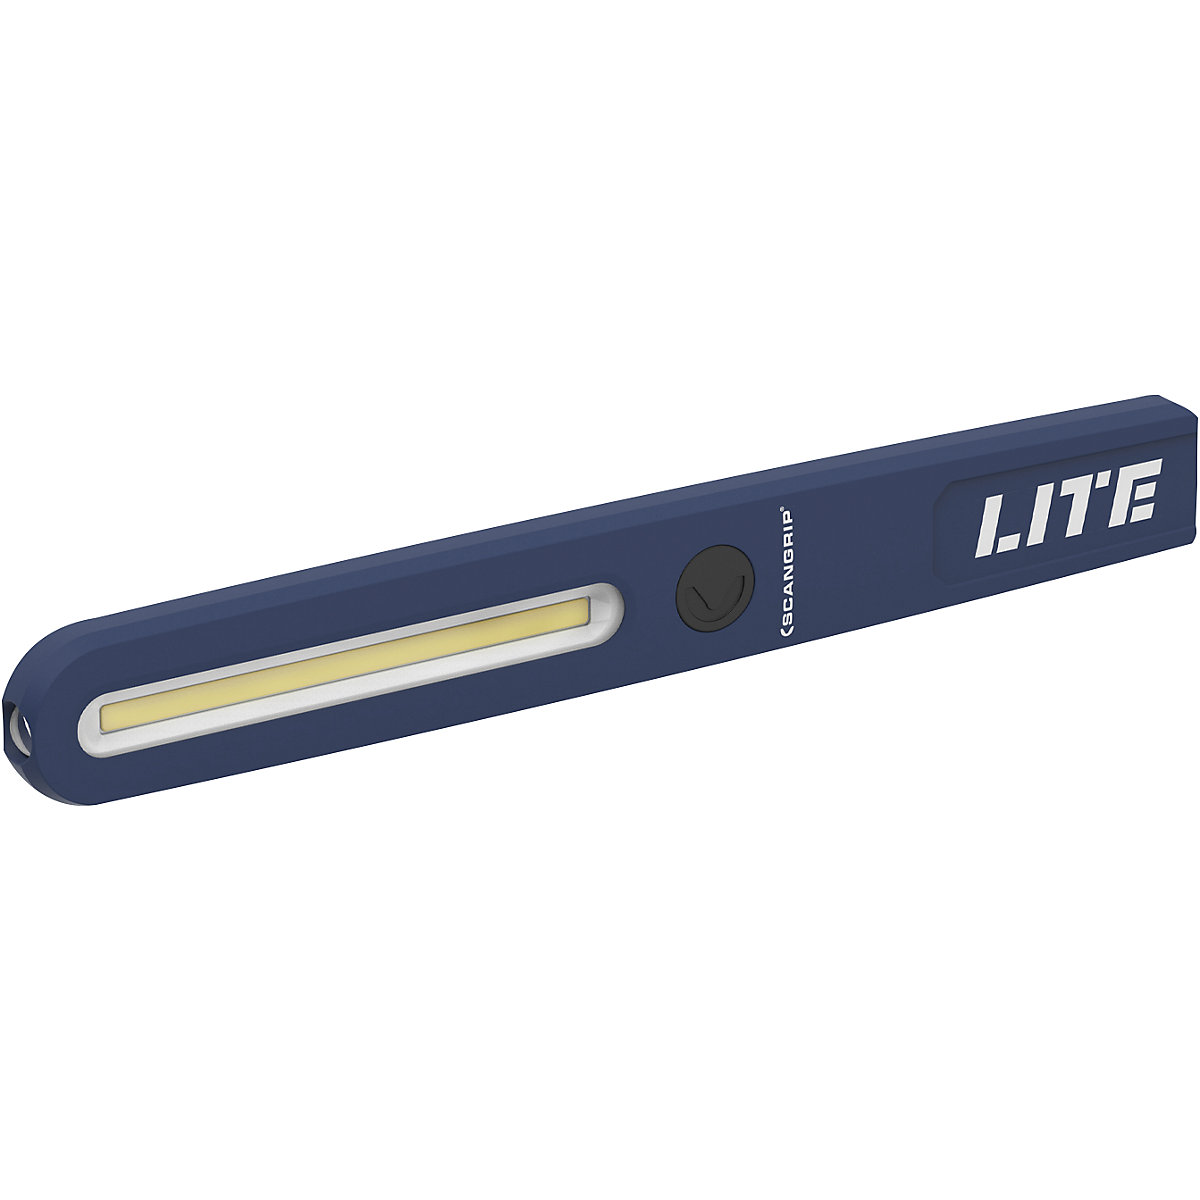 LED-Arbeitsleuchte Stick Lite M, 00088116